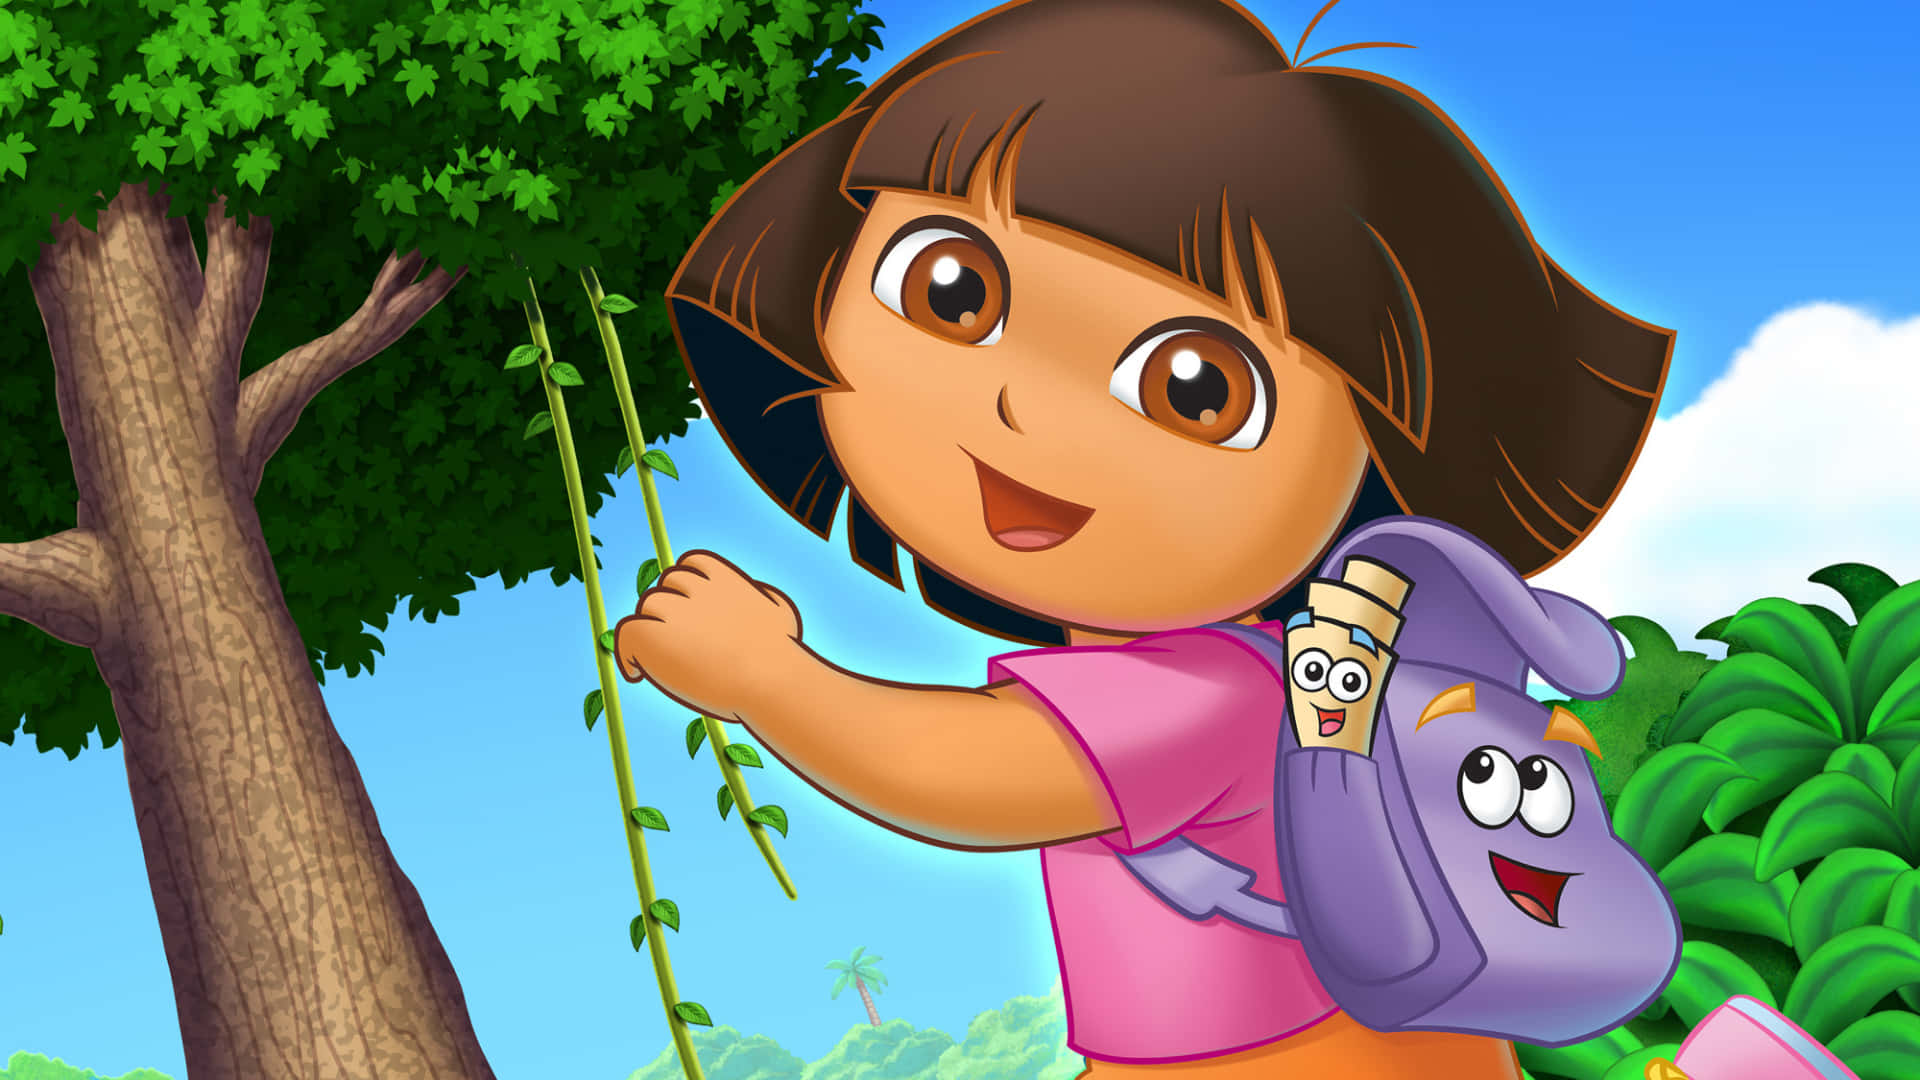 Dora The Explorer Pictures